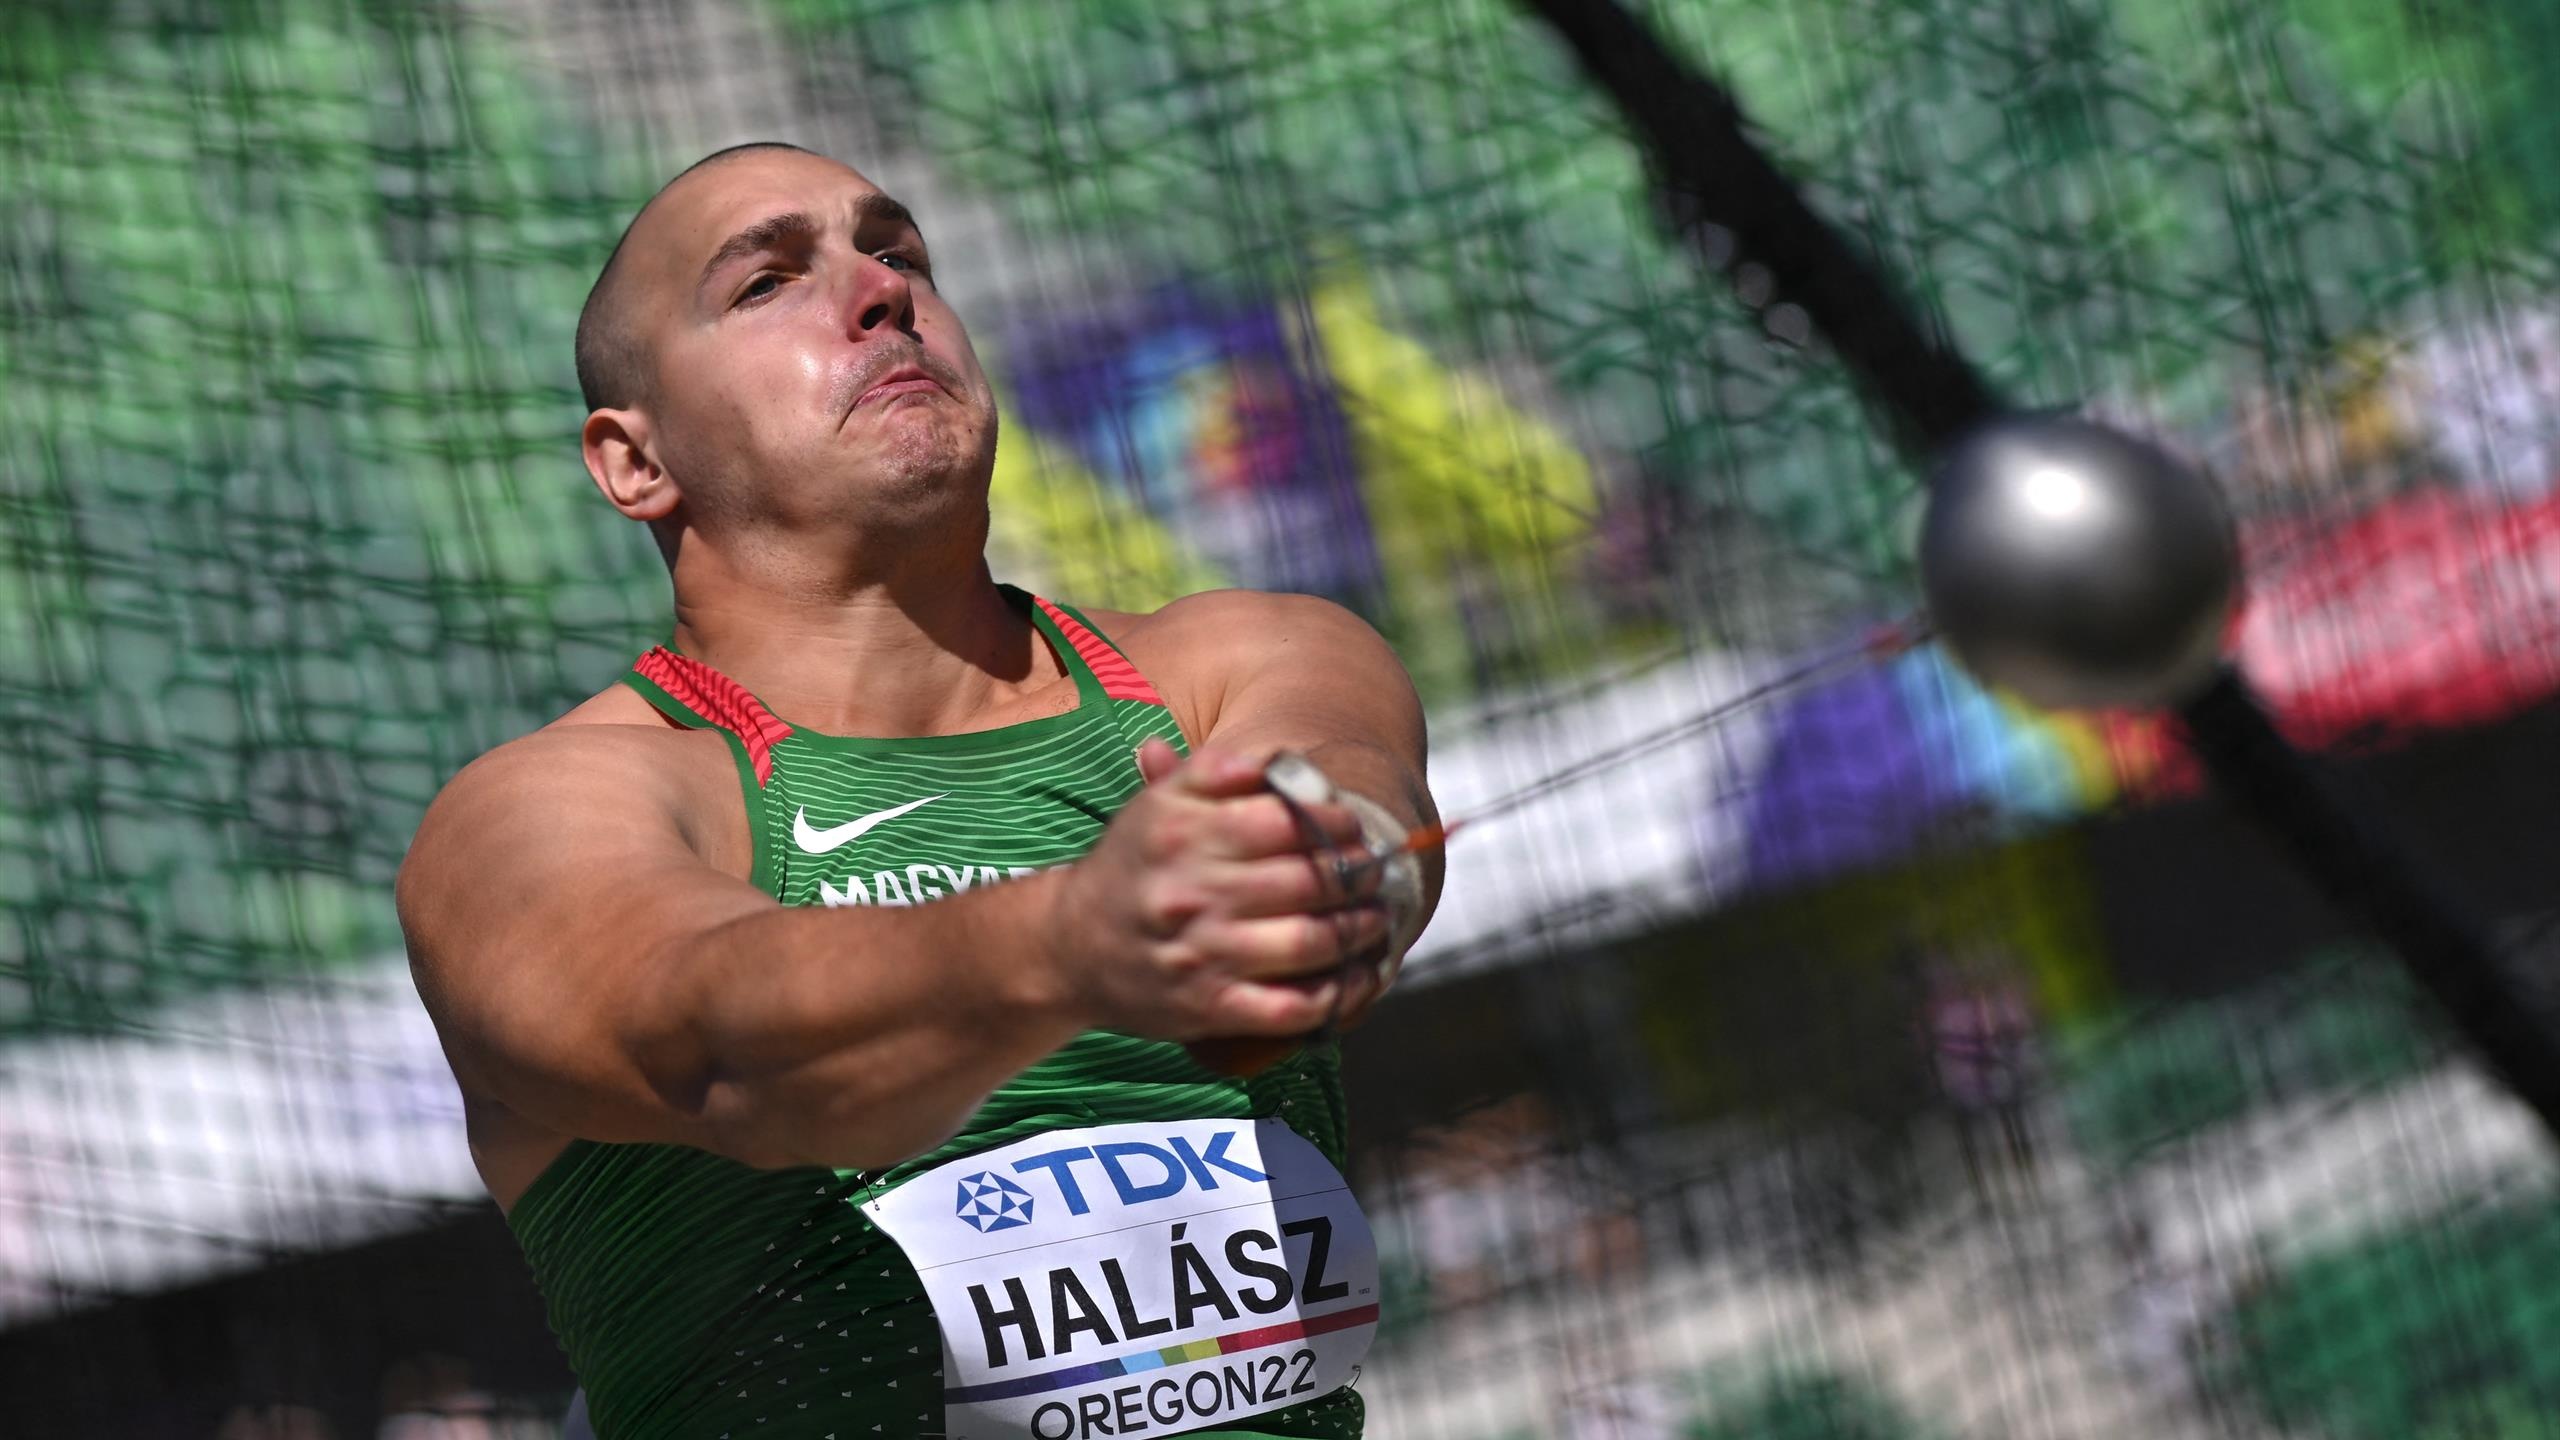 Bence Halasz, Incredible throw, World Championships bronze, Eurosport coverage, 2560x1440 HD Desktop